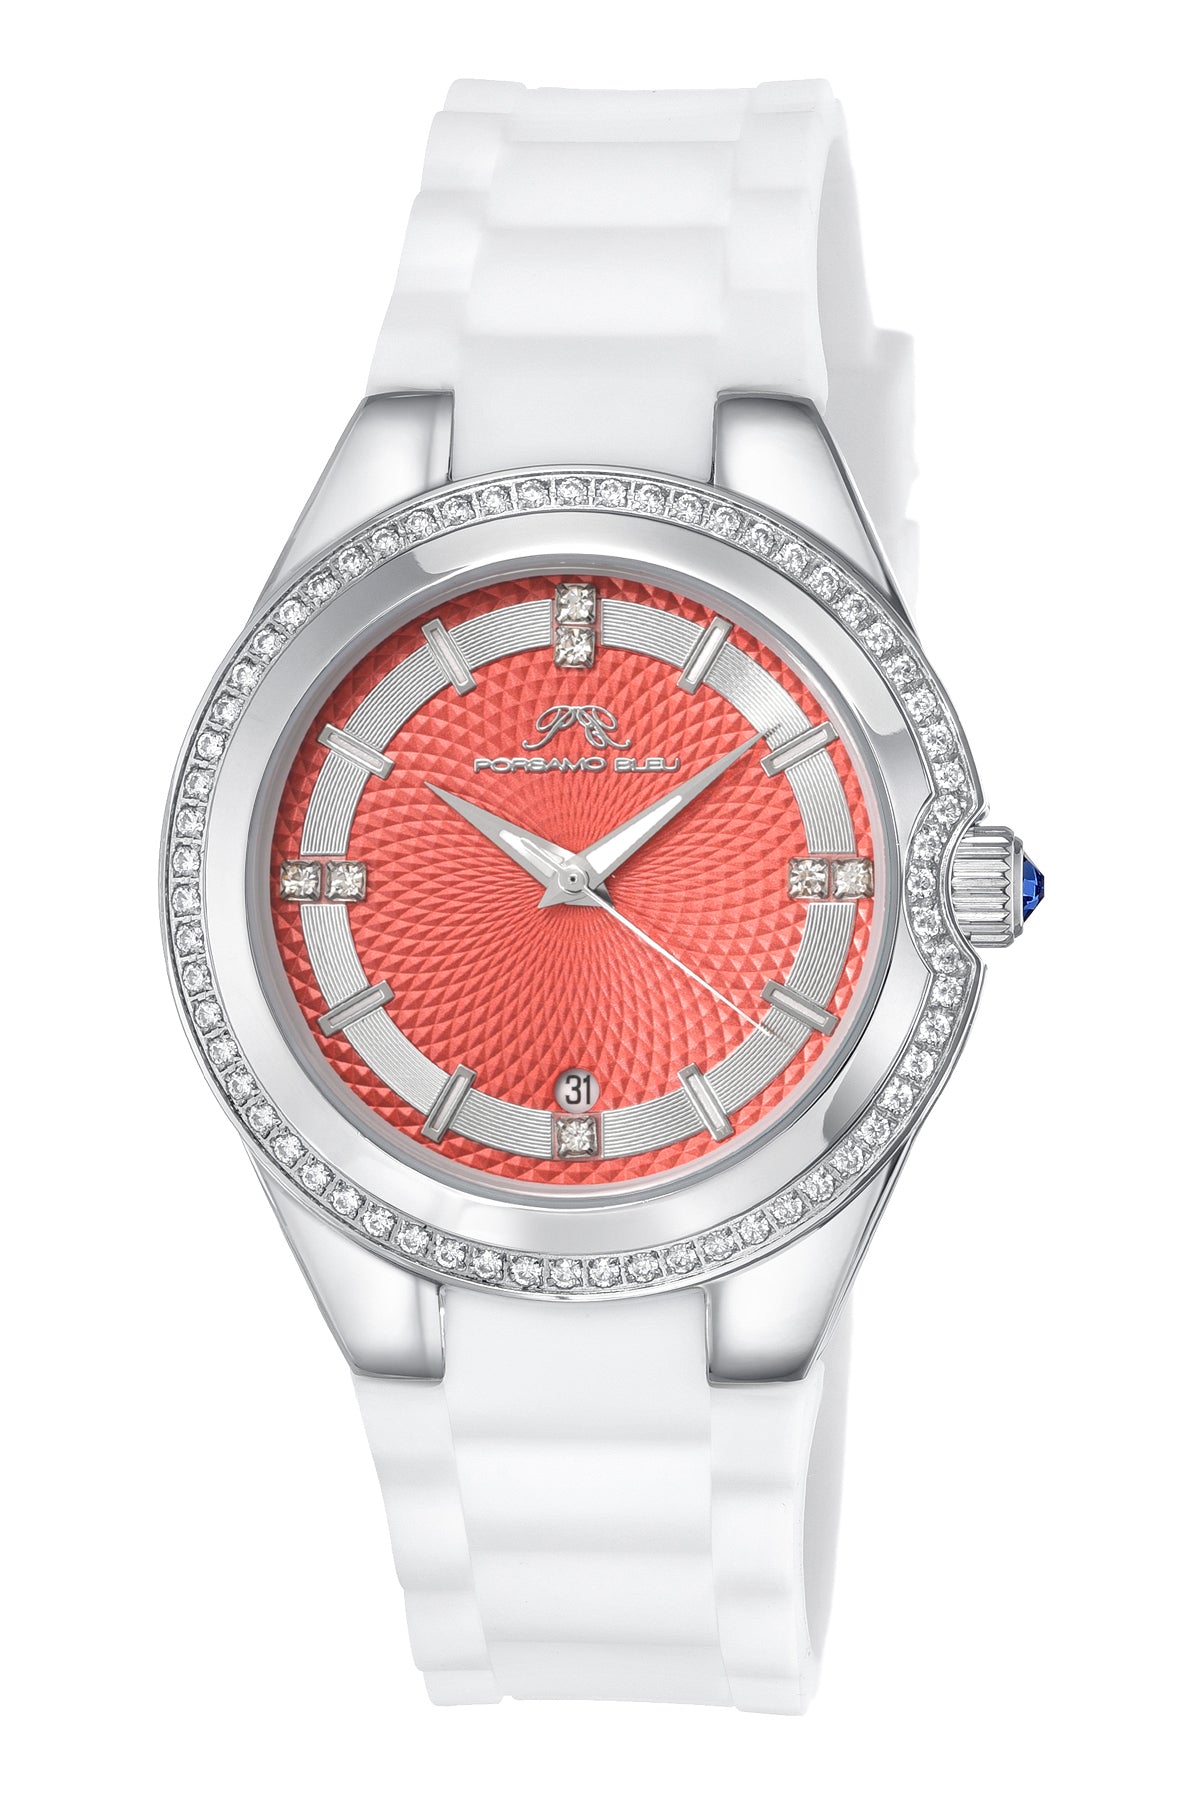 Porsamo Bleu Guilia Luxury Women's Silicone Strap Watch, Interchangeable Bands, Silver, White, Red 1122AGUR